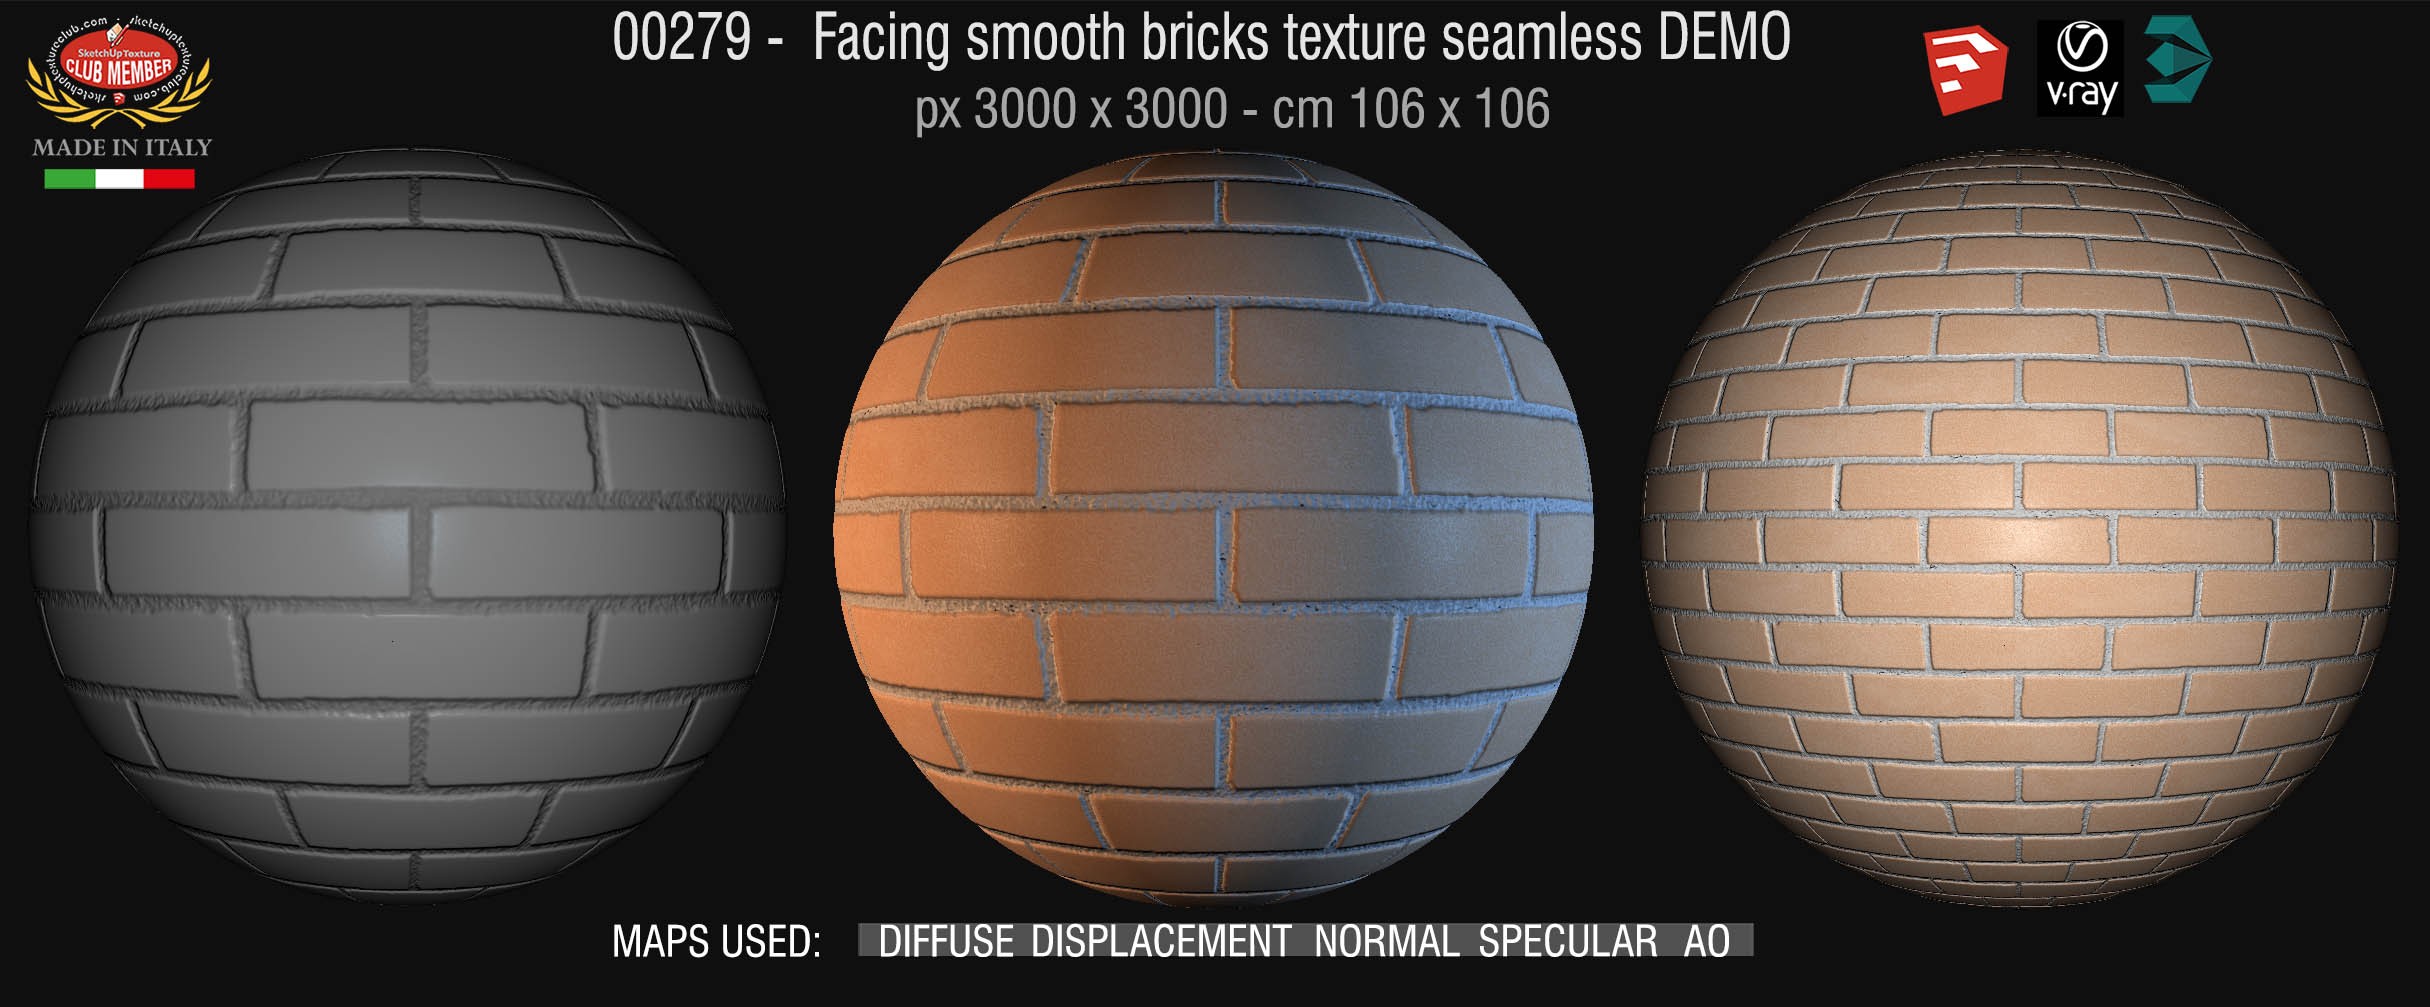 00279 Facing smooth bricks texture seamless + maps DEMO